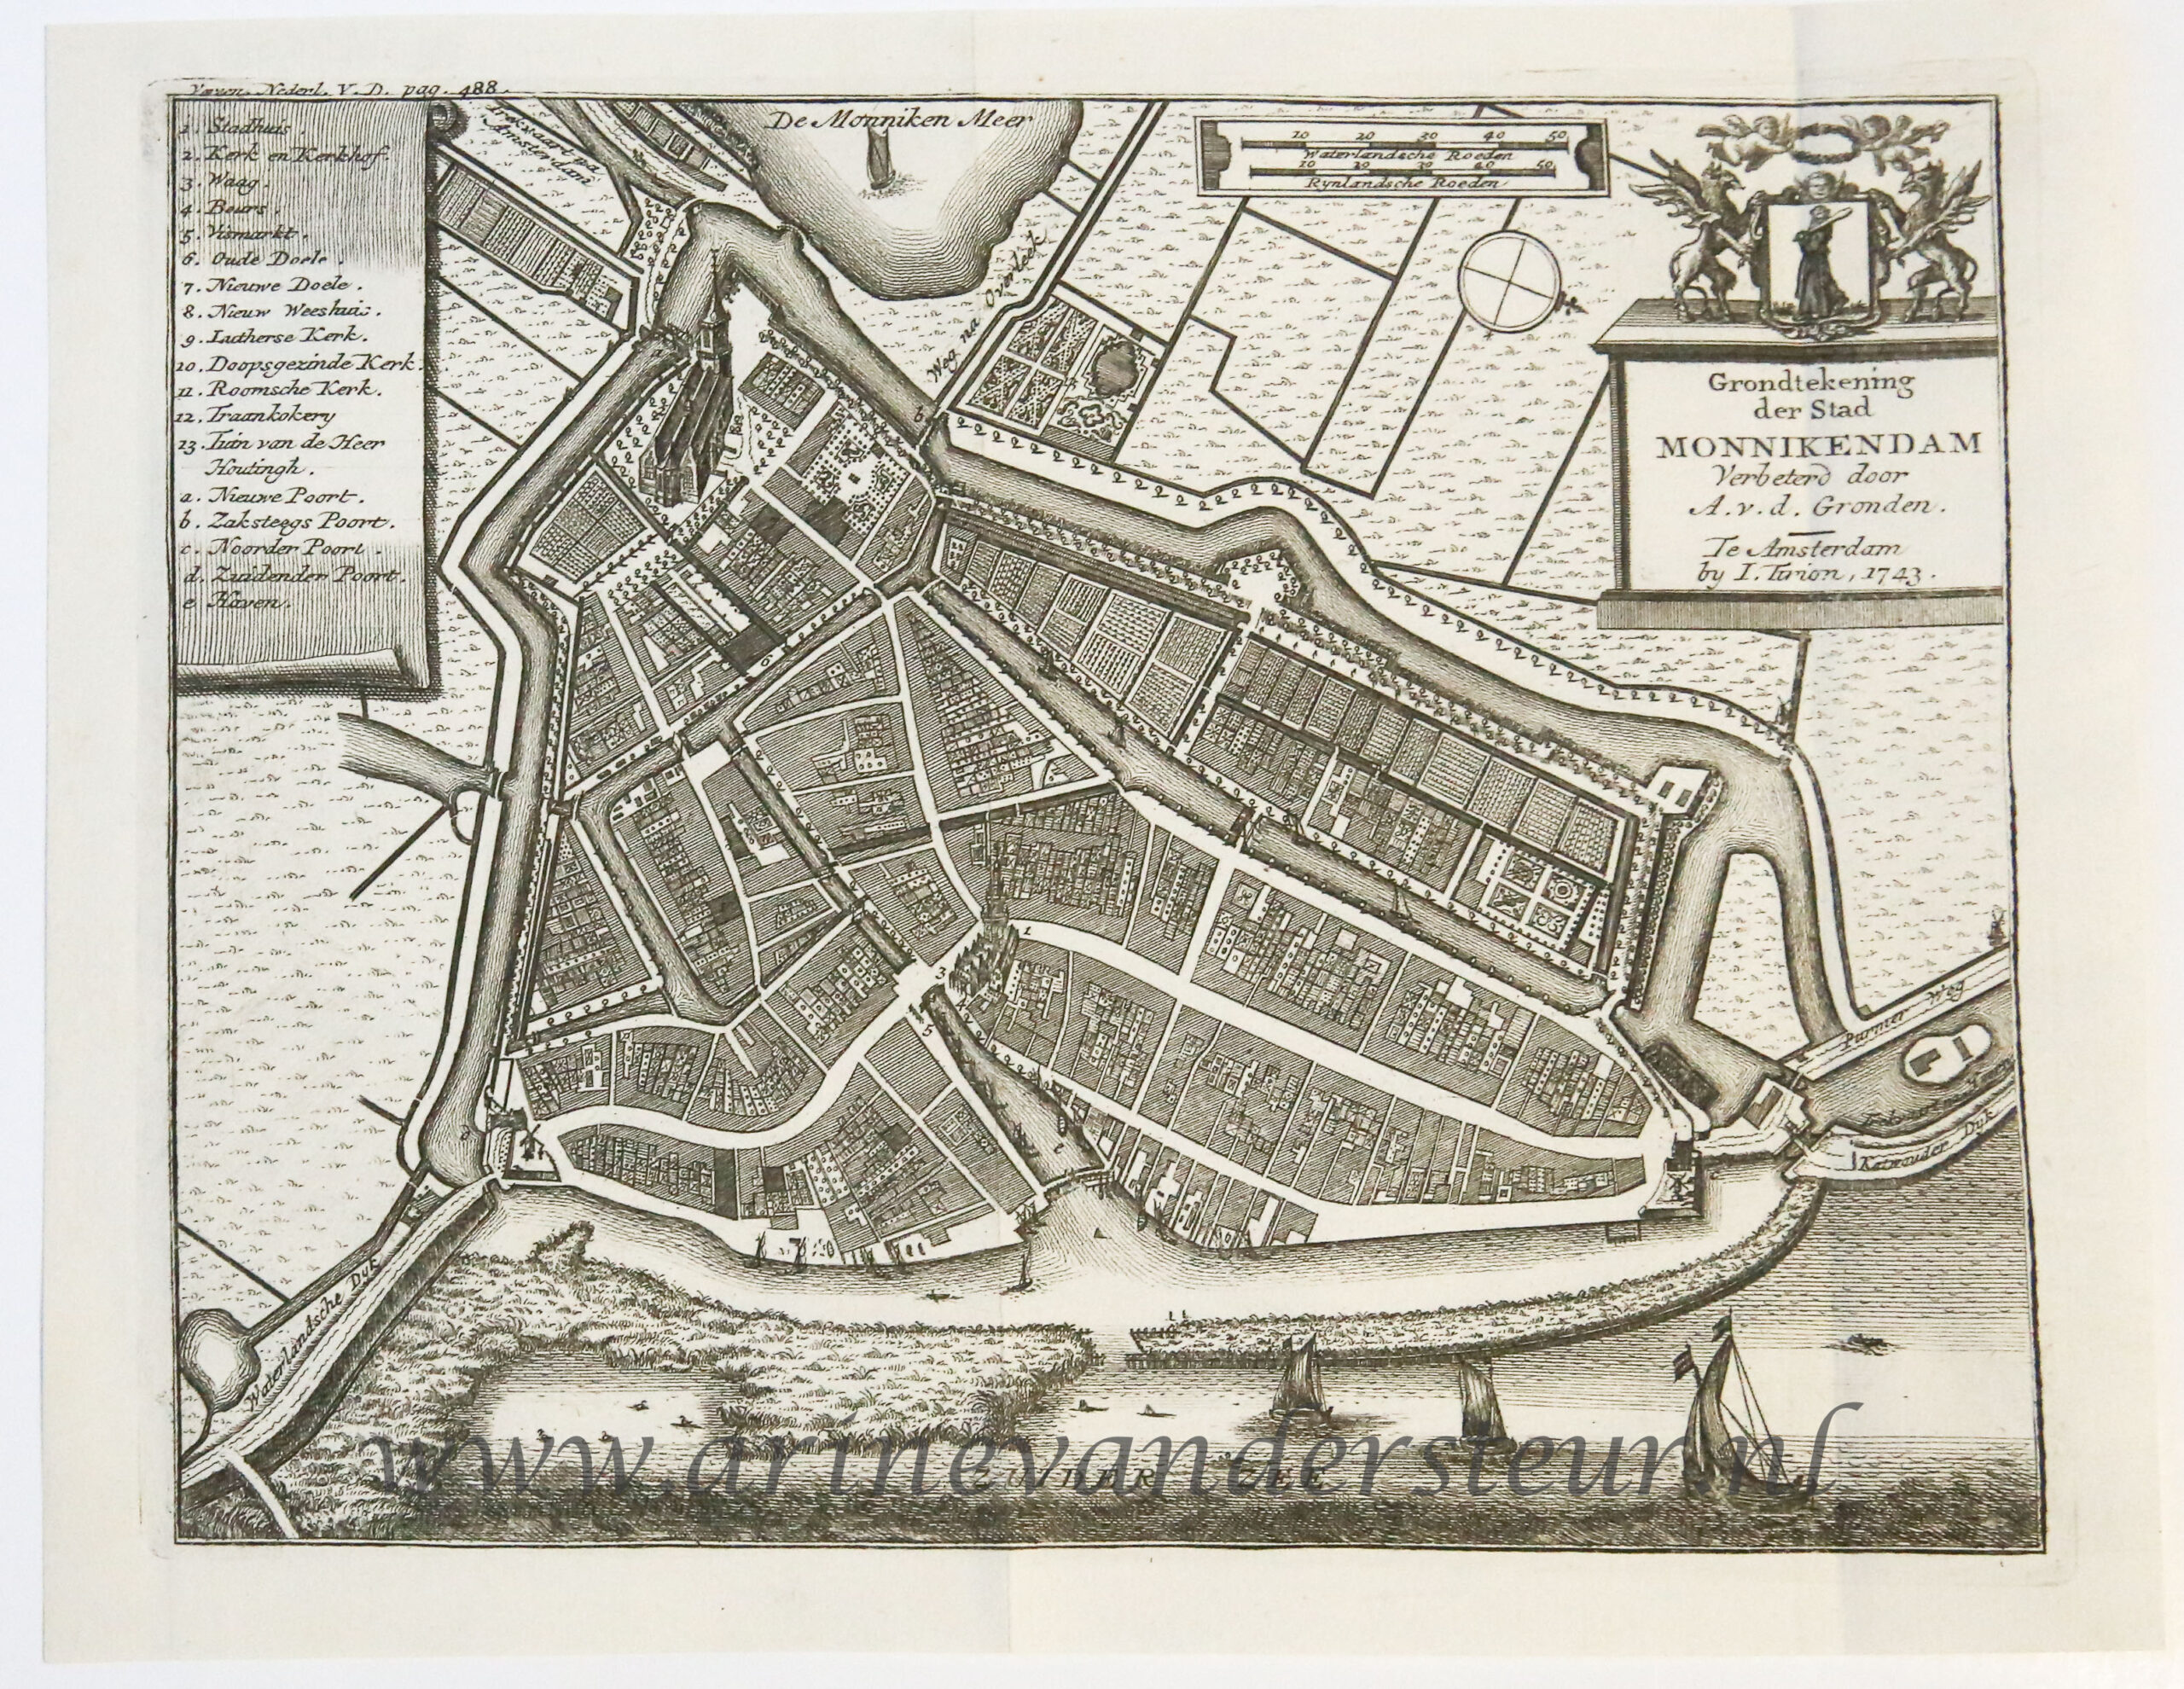  - [Antique print; cartography, oude prent Monneckendam] Grondtekening der Stad MONNIKENDAM, published 1743.